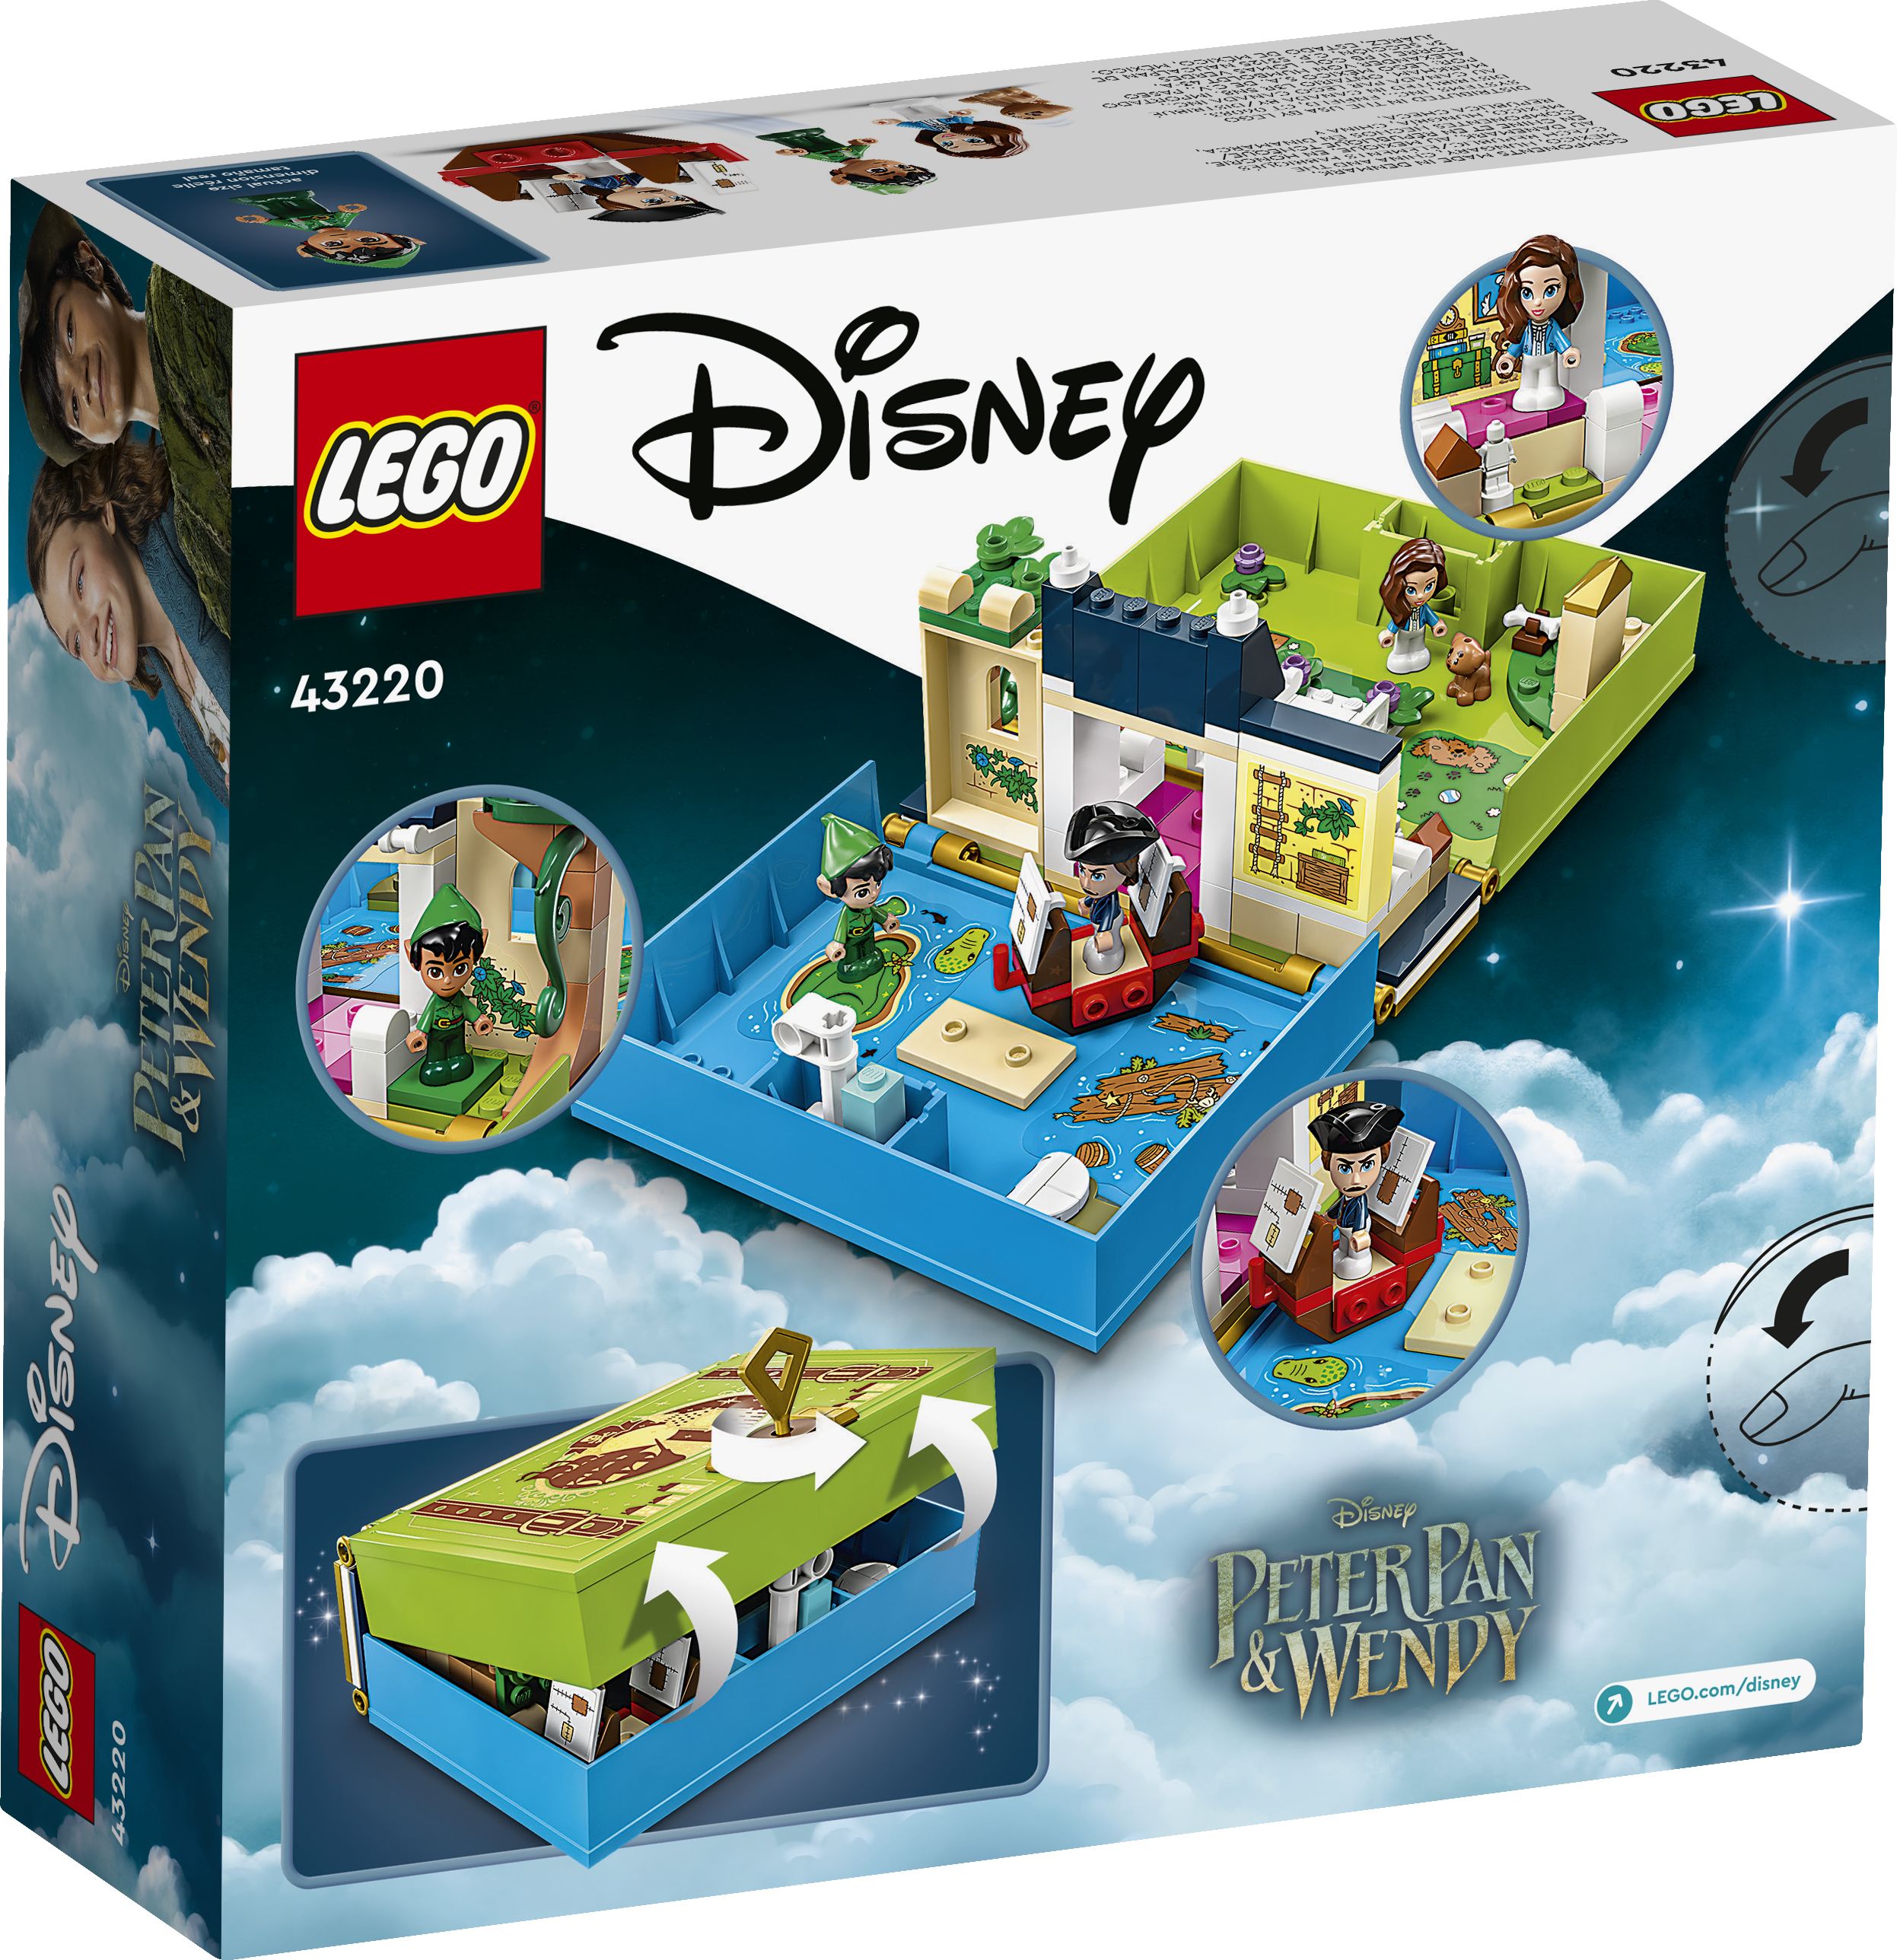 LEGO Disney 43220 Peter Pan & Wendy – Märchenbuch-Abenteuer LEGO_43220_Box5_v39.jpg